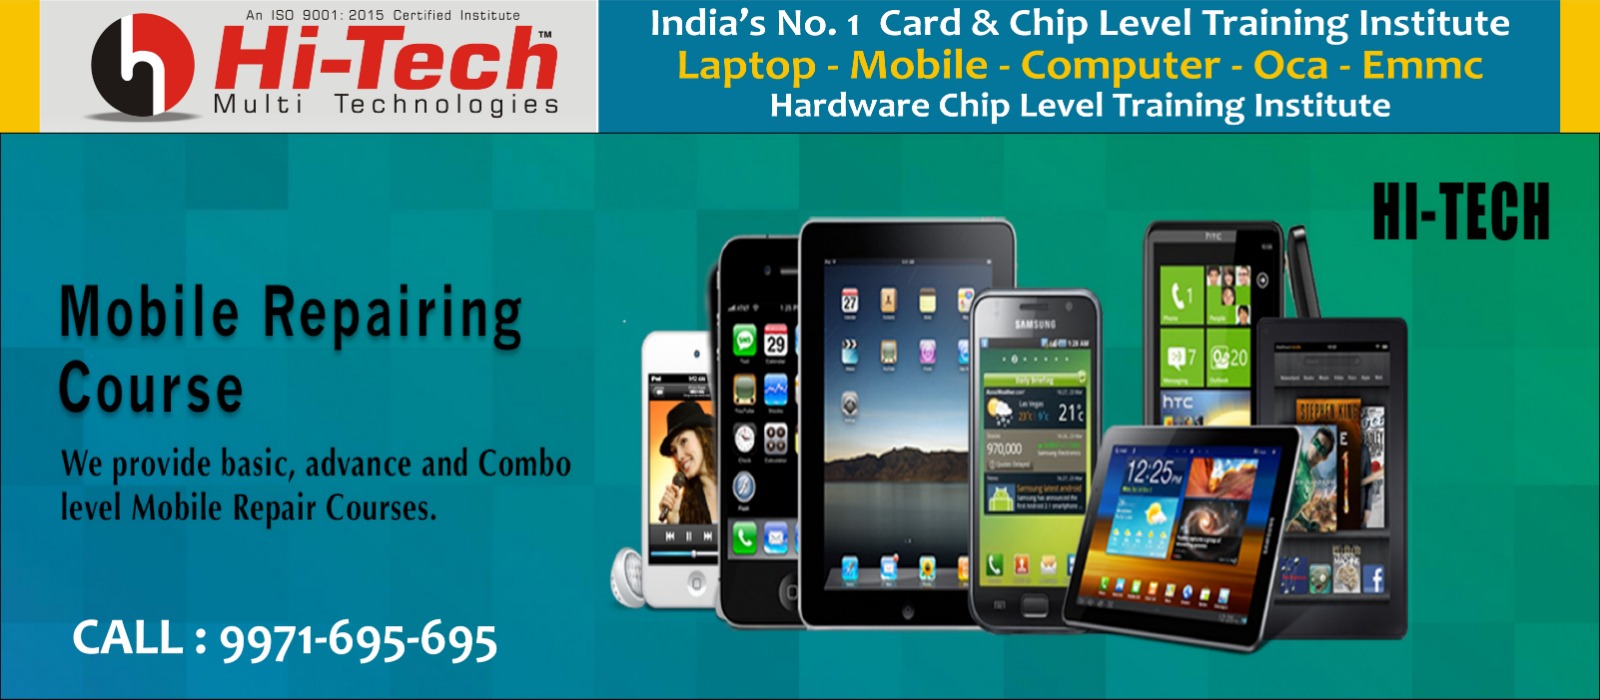 Advanced Mobile Repairing Course in Laxmi Nagar, Delhi | Call us on: +91-9971695695